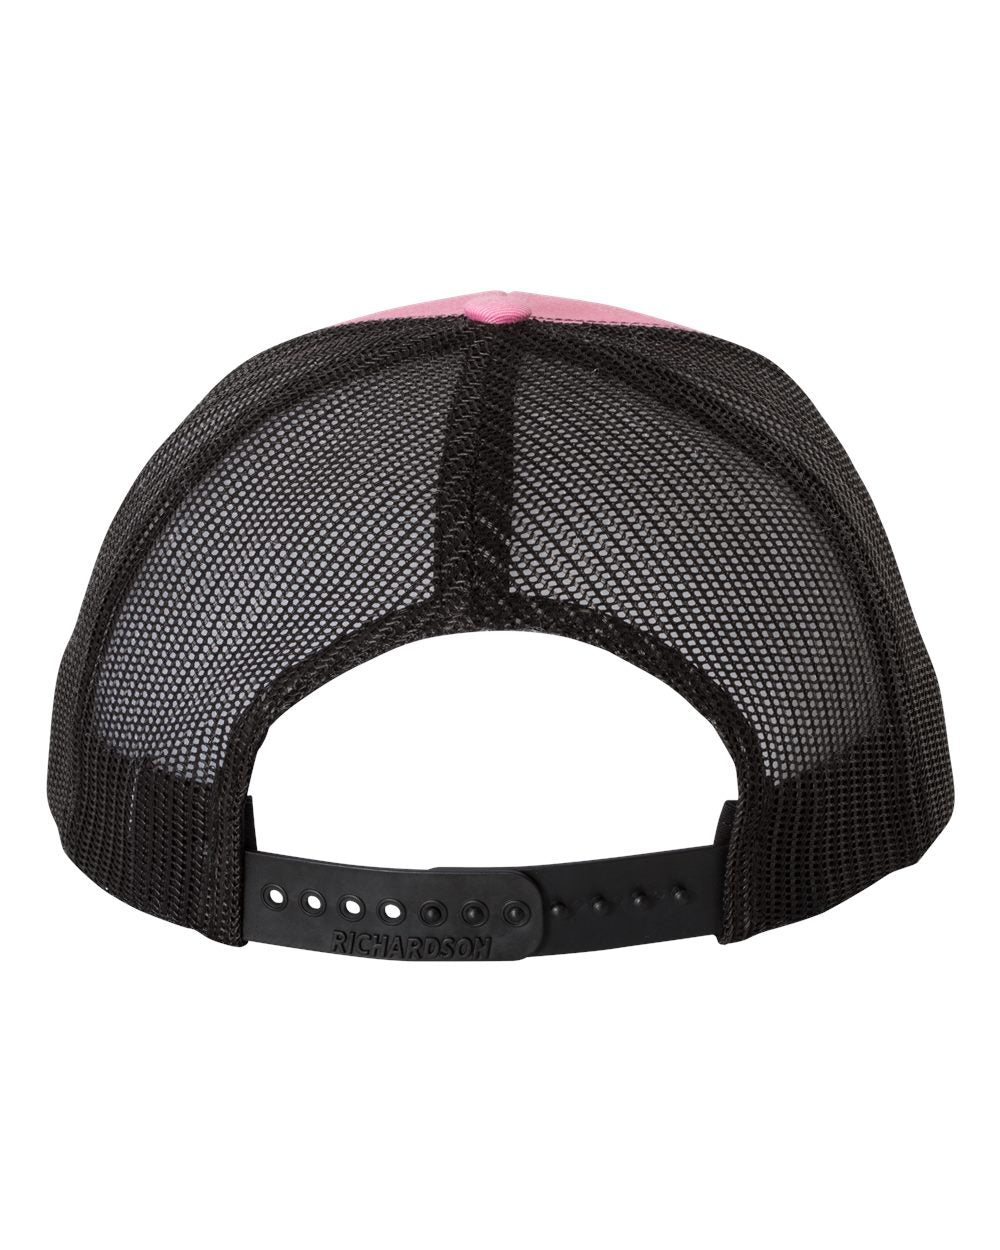 Memphis Grizzlies 3D Snapback Trucker Hat- Hot Pink/ Black